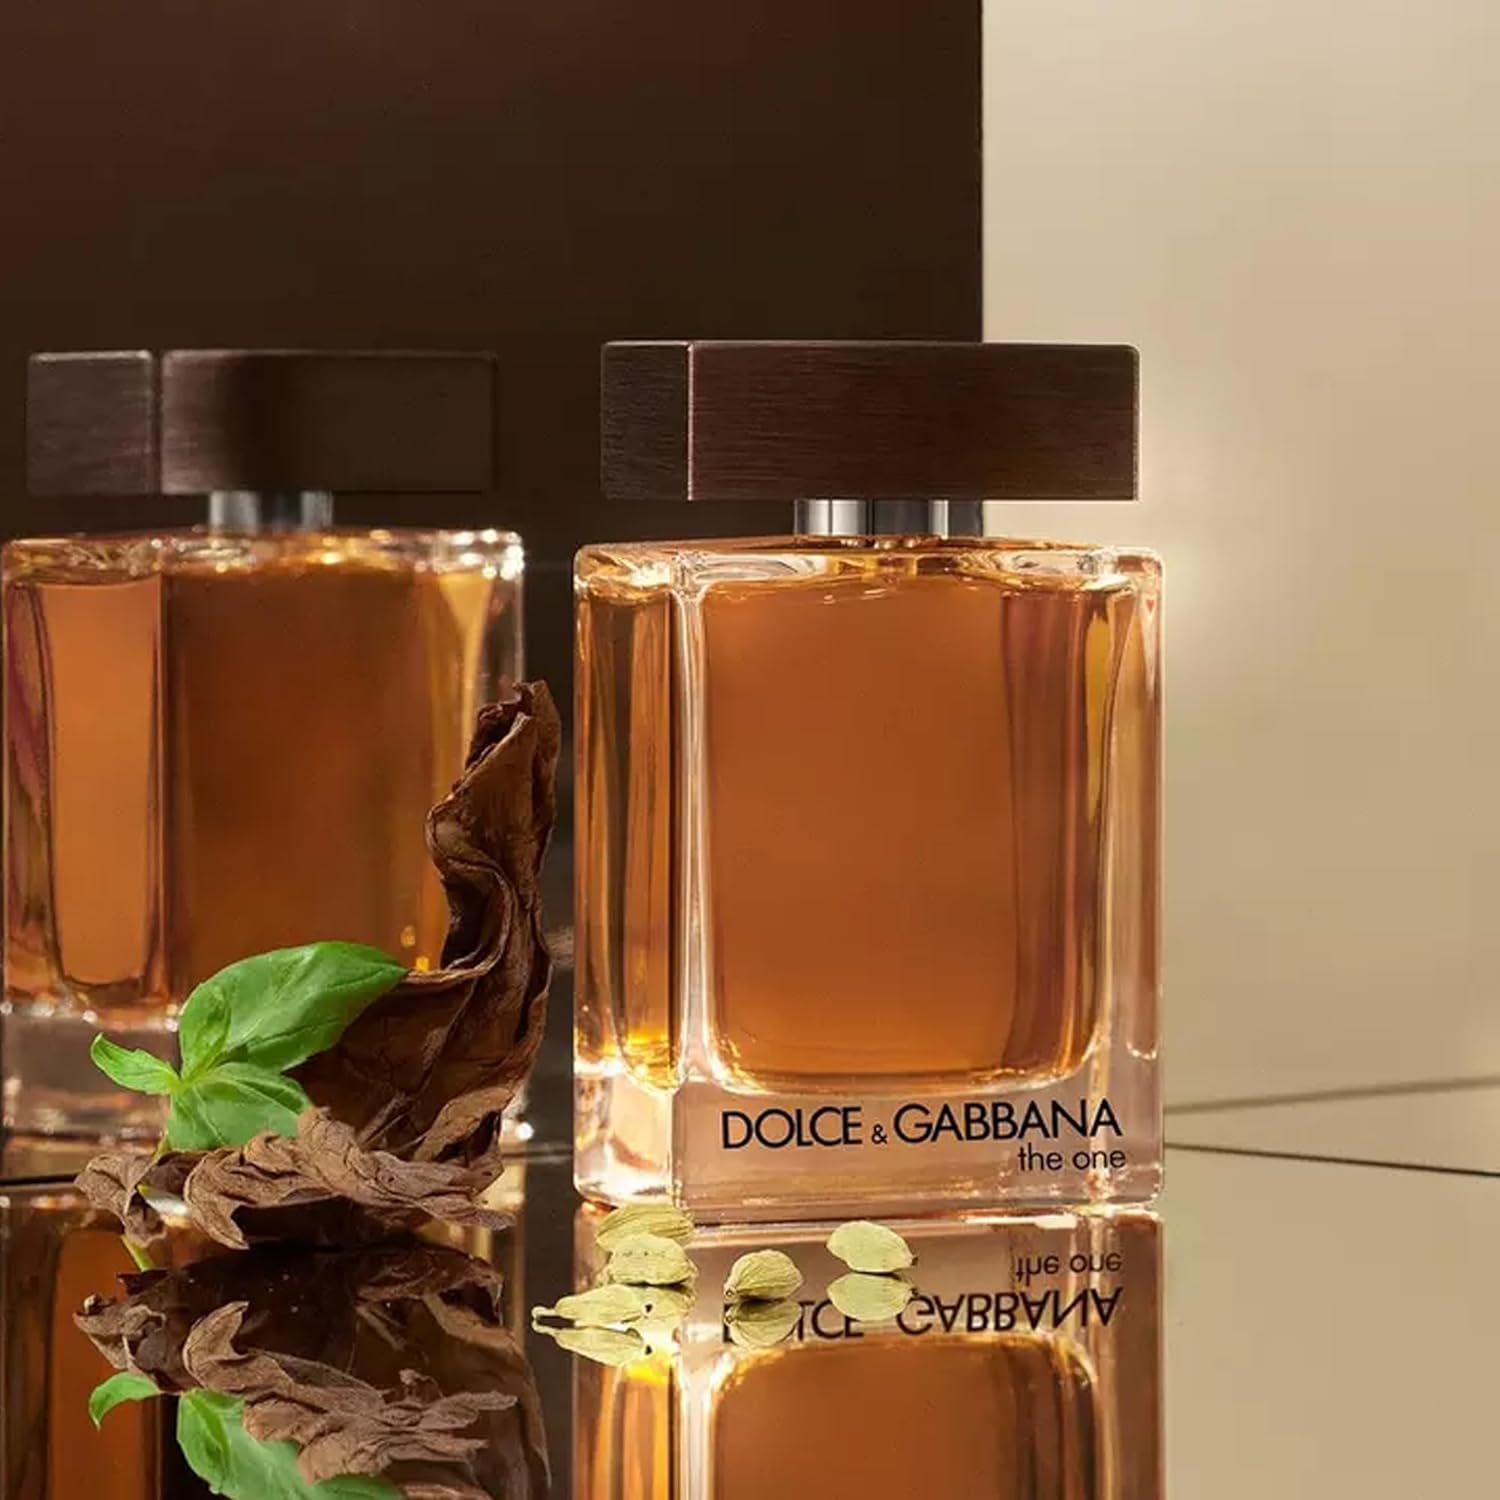 Dolce & Gabbana The One, Eau De Toilette Spray, Fragrance For Men 3.4oz